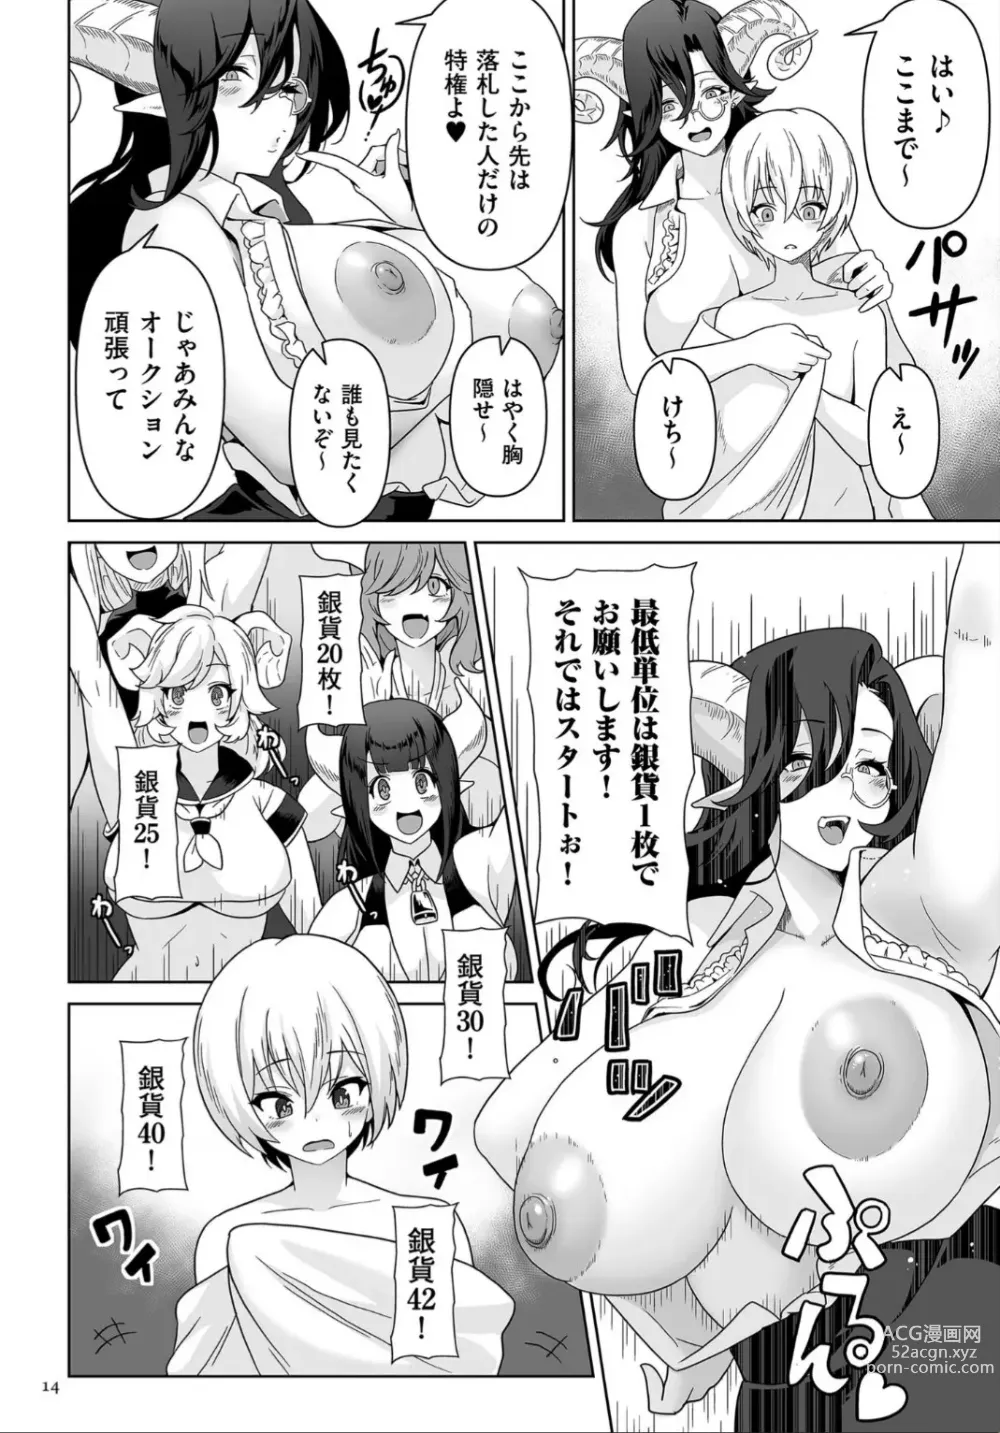 Page 14 of manga Succubus Kingdom